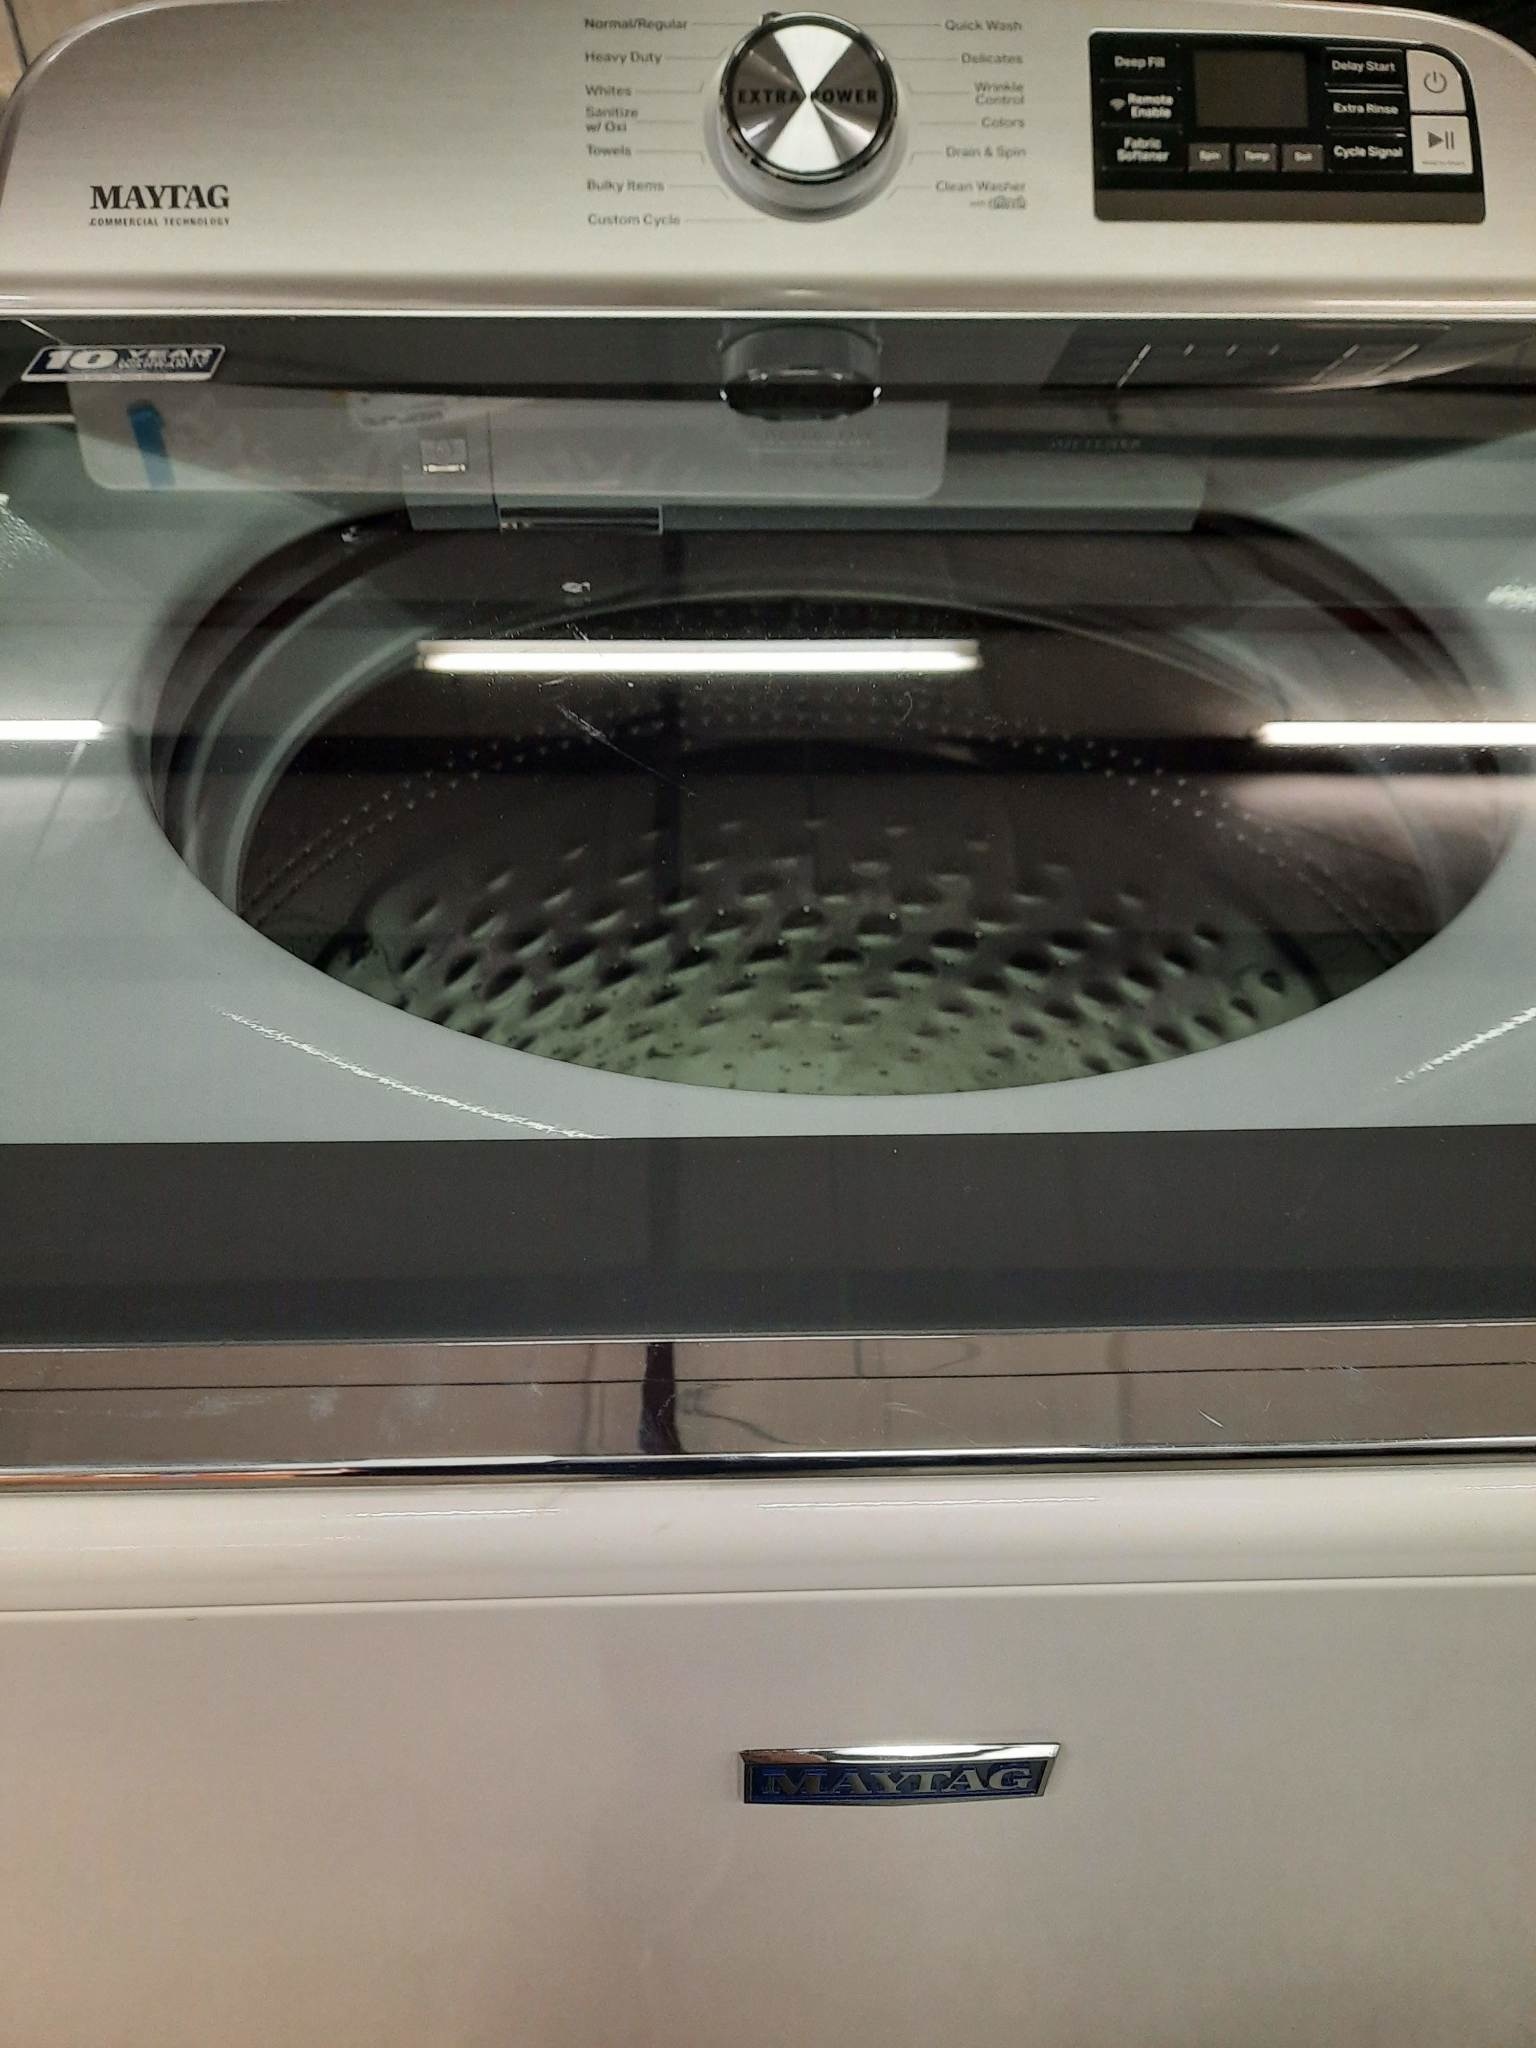 Giantex FP10091 Full-Automatic Washing Machine Portable Compact